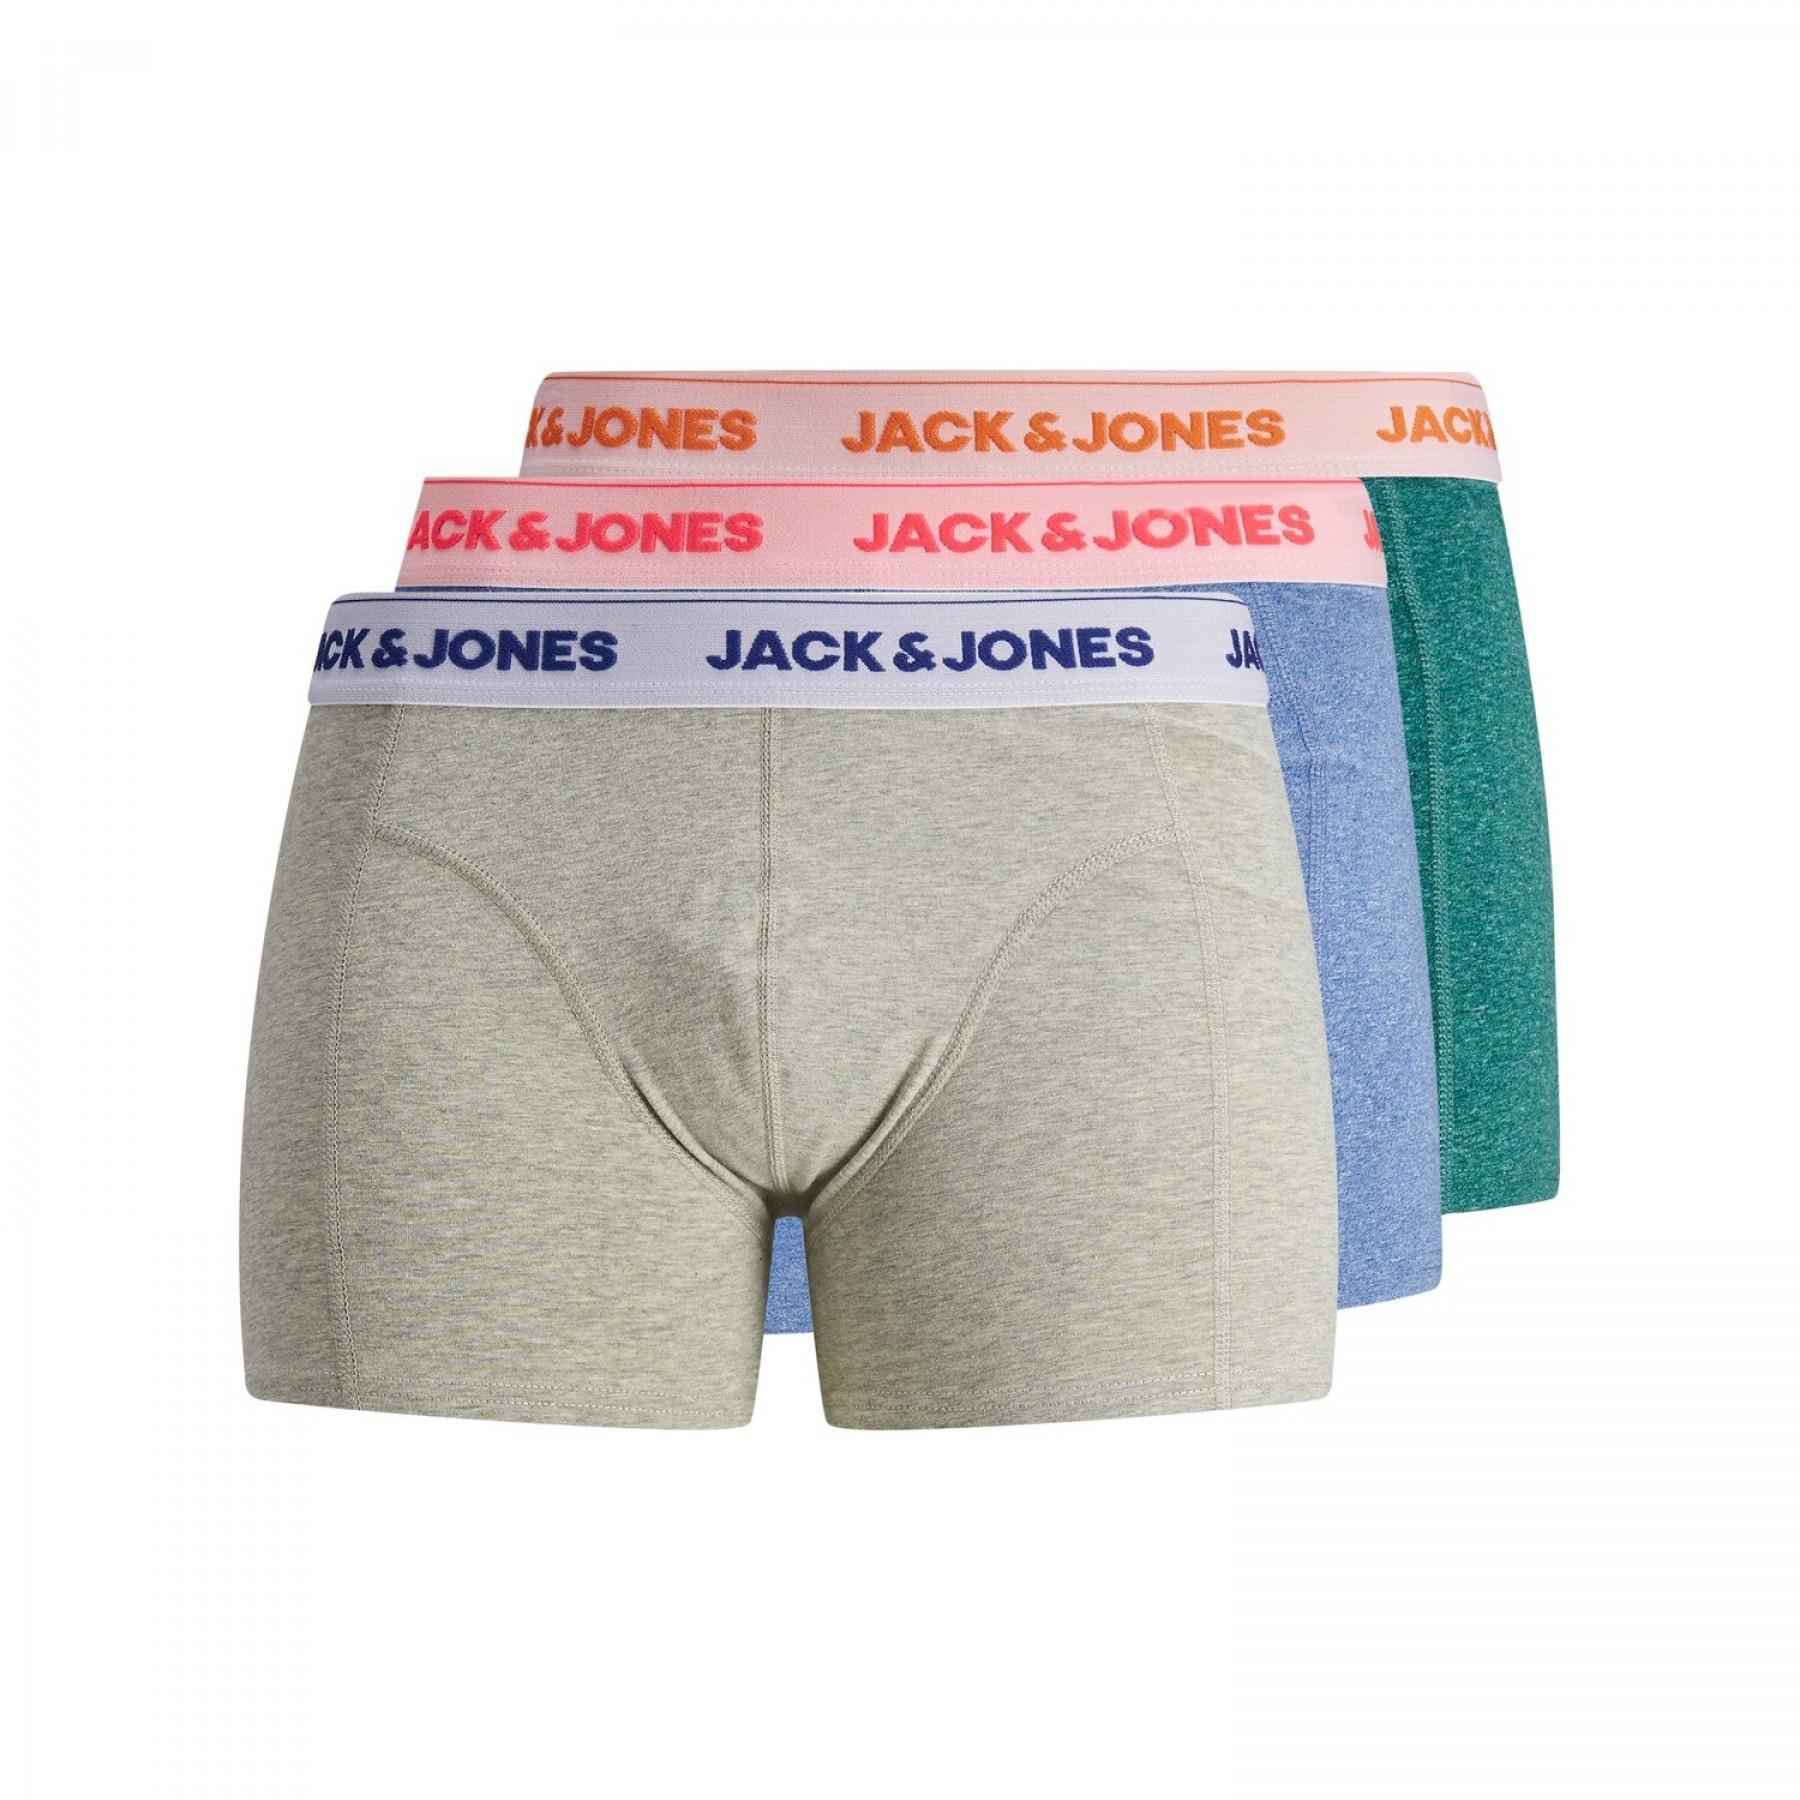 Set of 3 boxer shorts Jack & Jones Jacsuper Twist